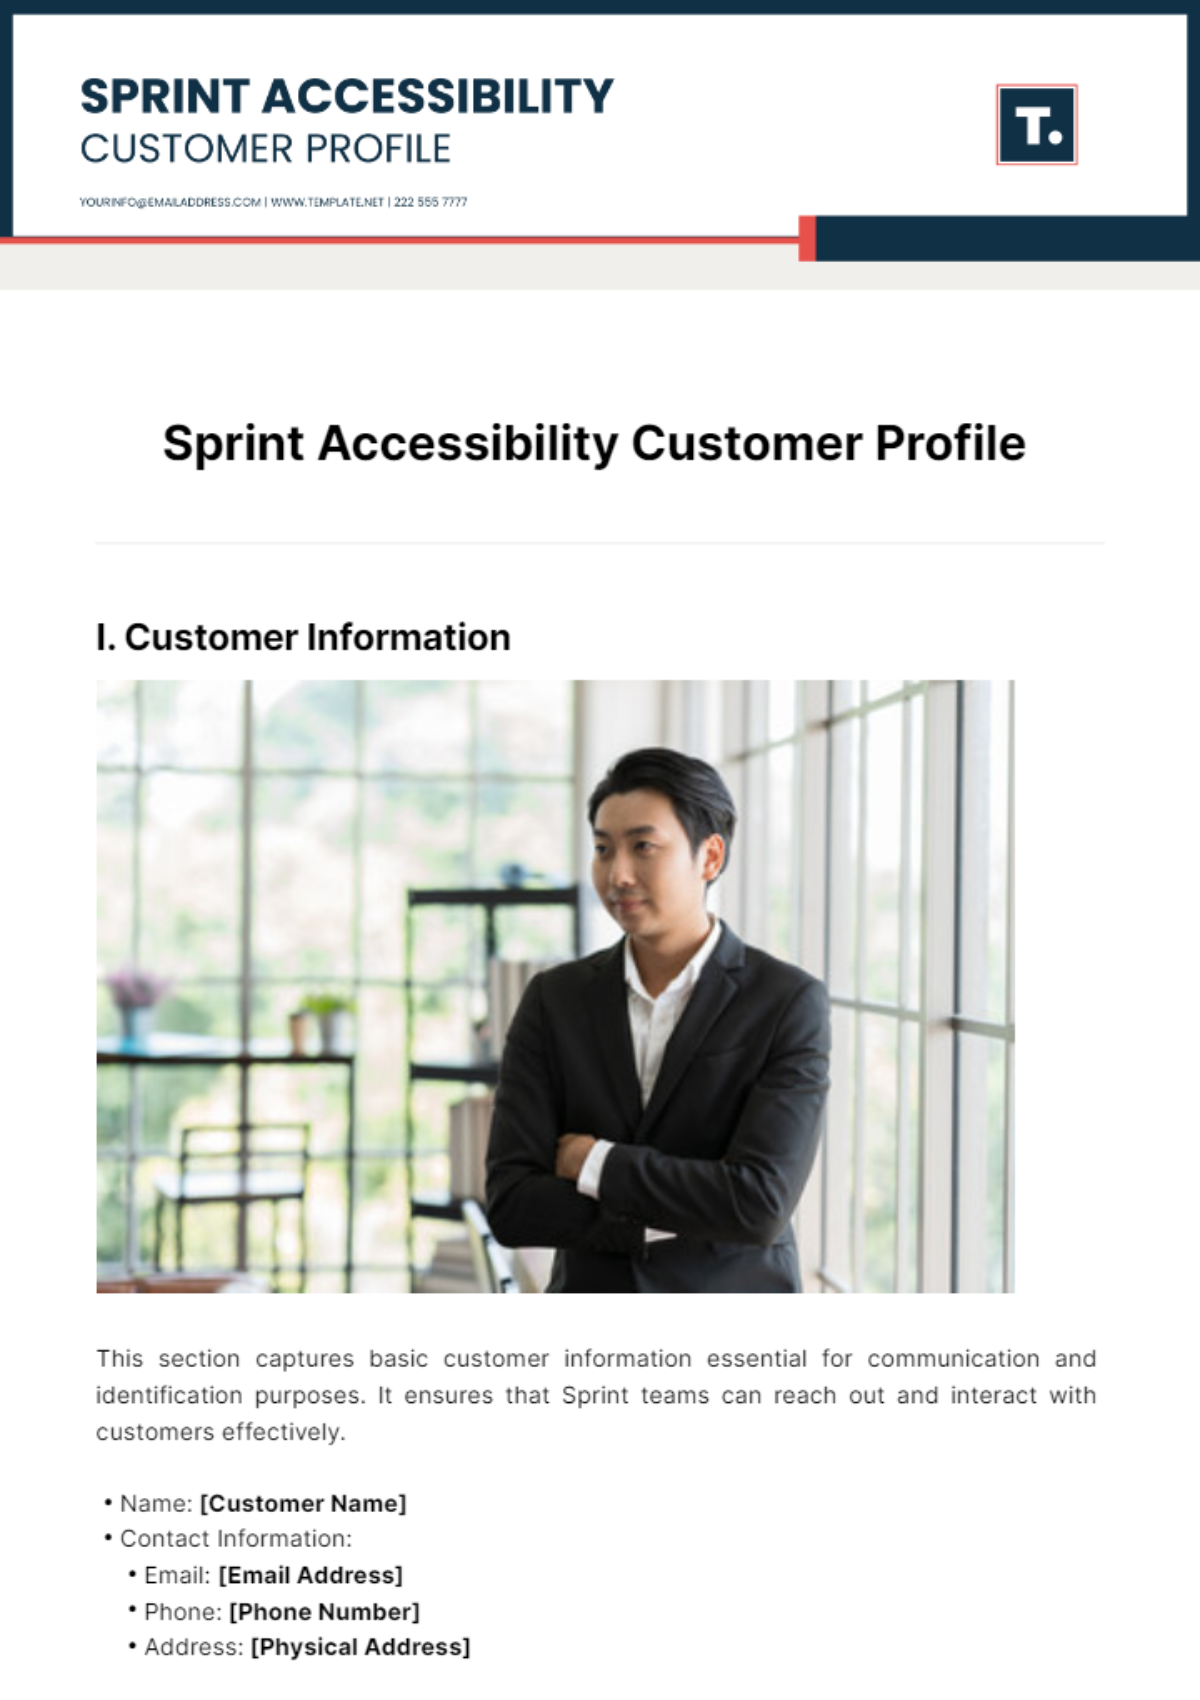 Sprint Accessibility Customer Profile Template